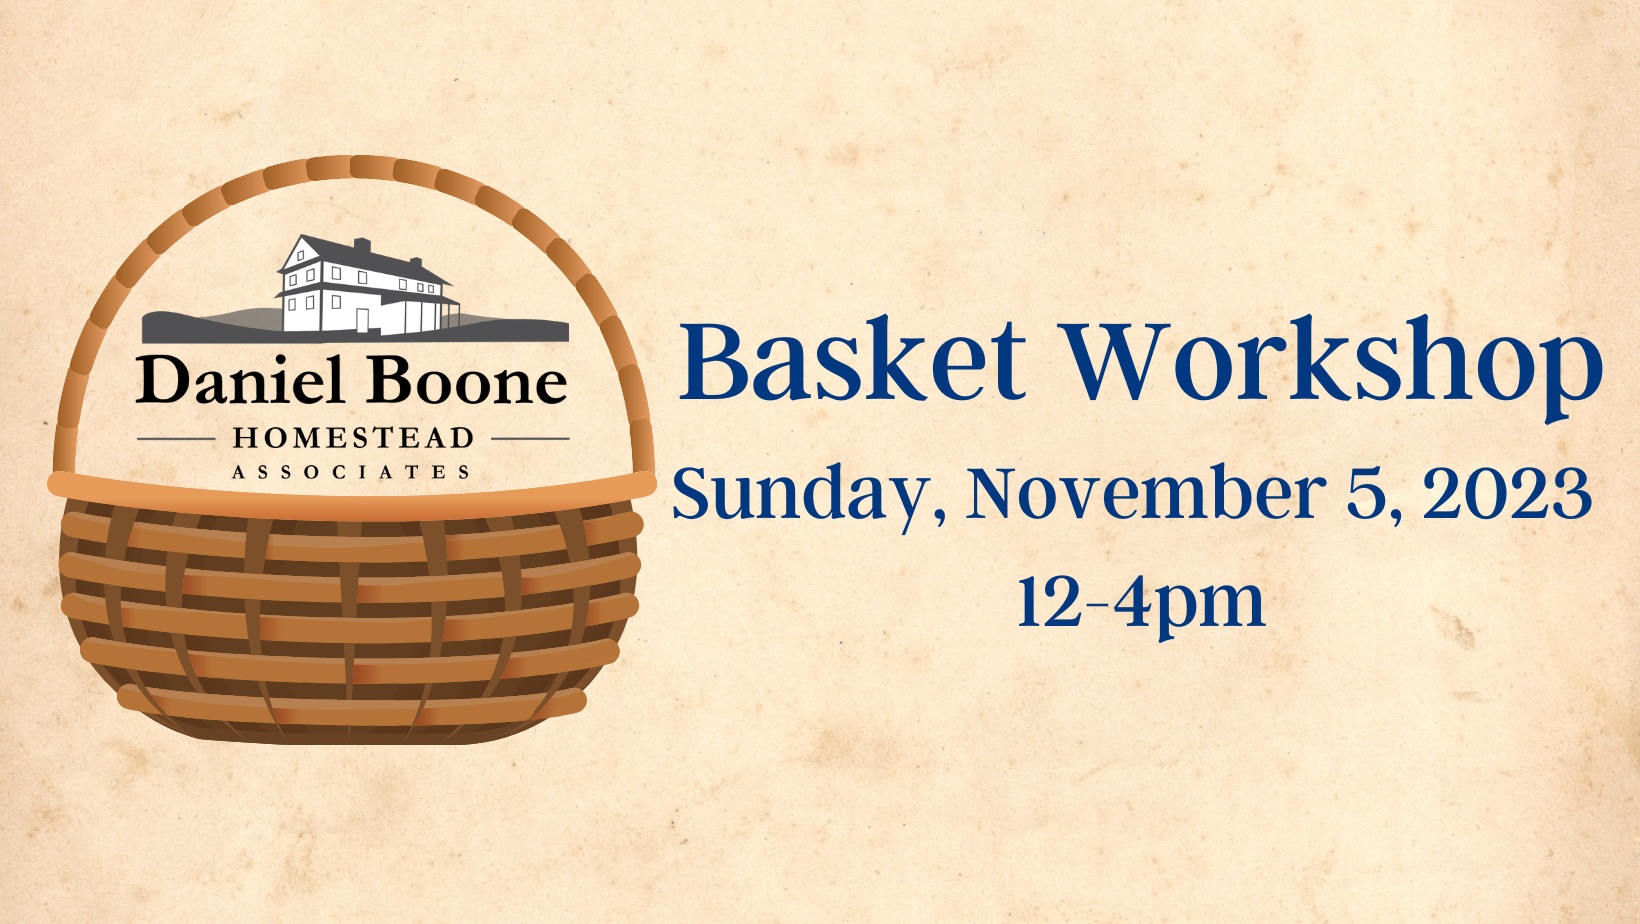 Daniel Boone Homestead Associates Basket Workshop